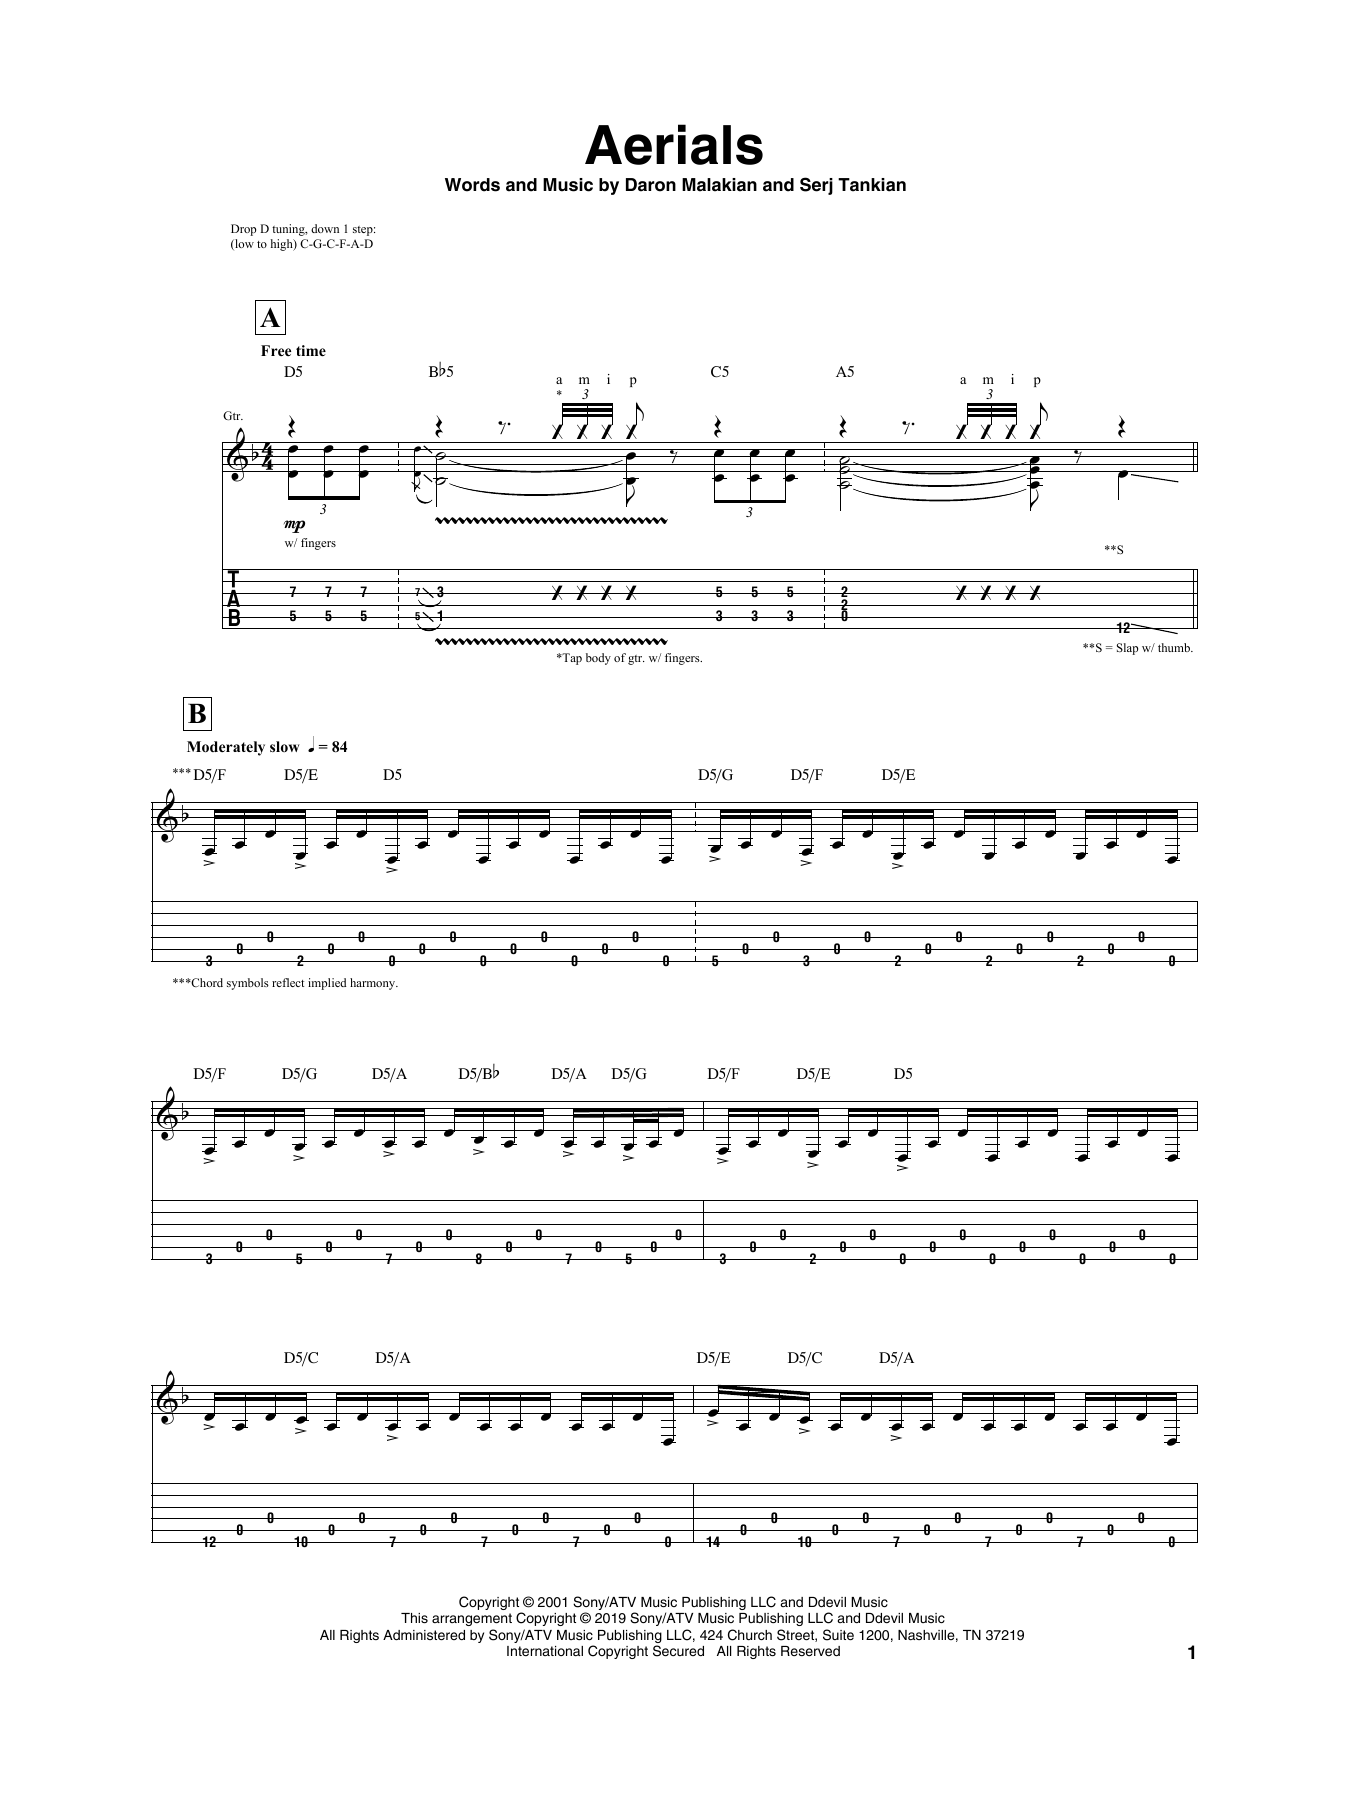 Igor Presnyakov Aerials Sheet Music Notes & Chords for Guitar Tab - Download or Print PDF